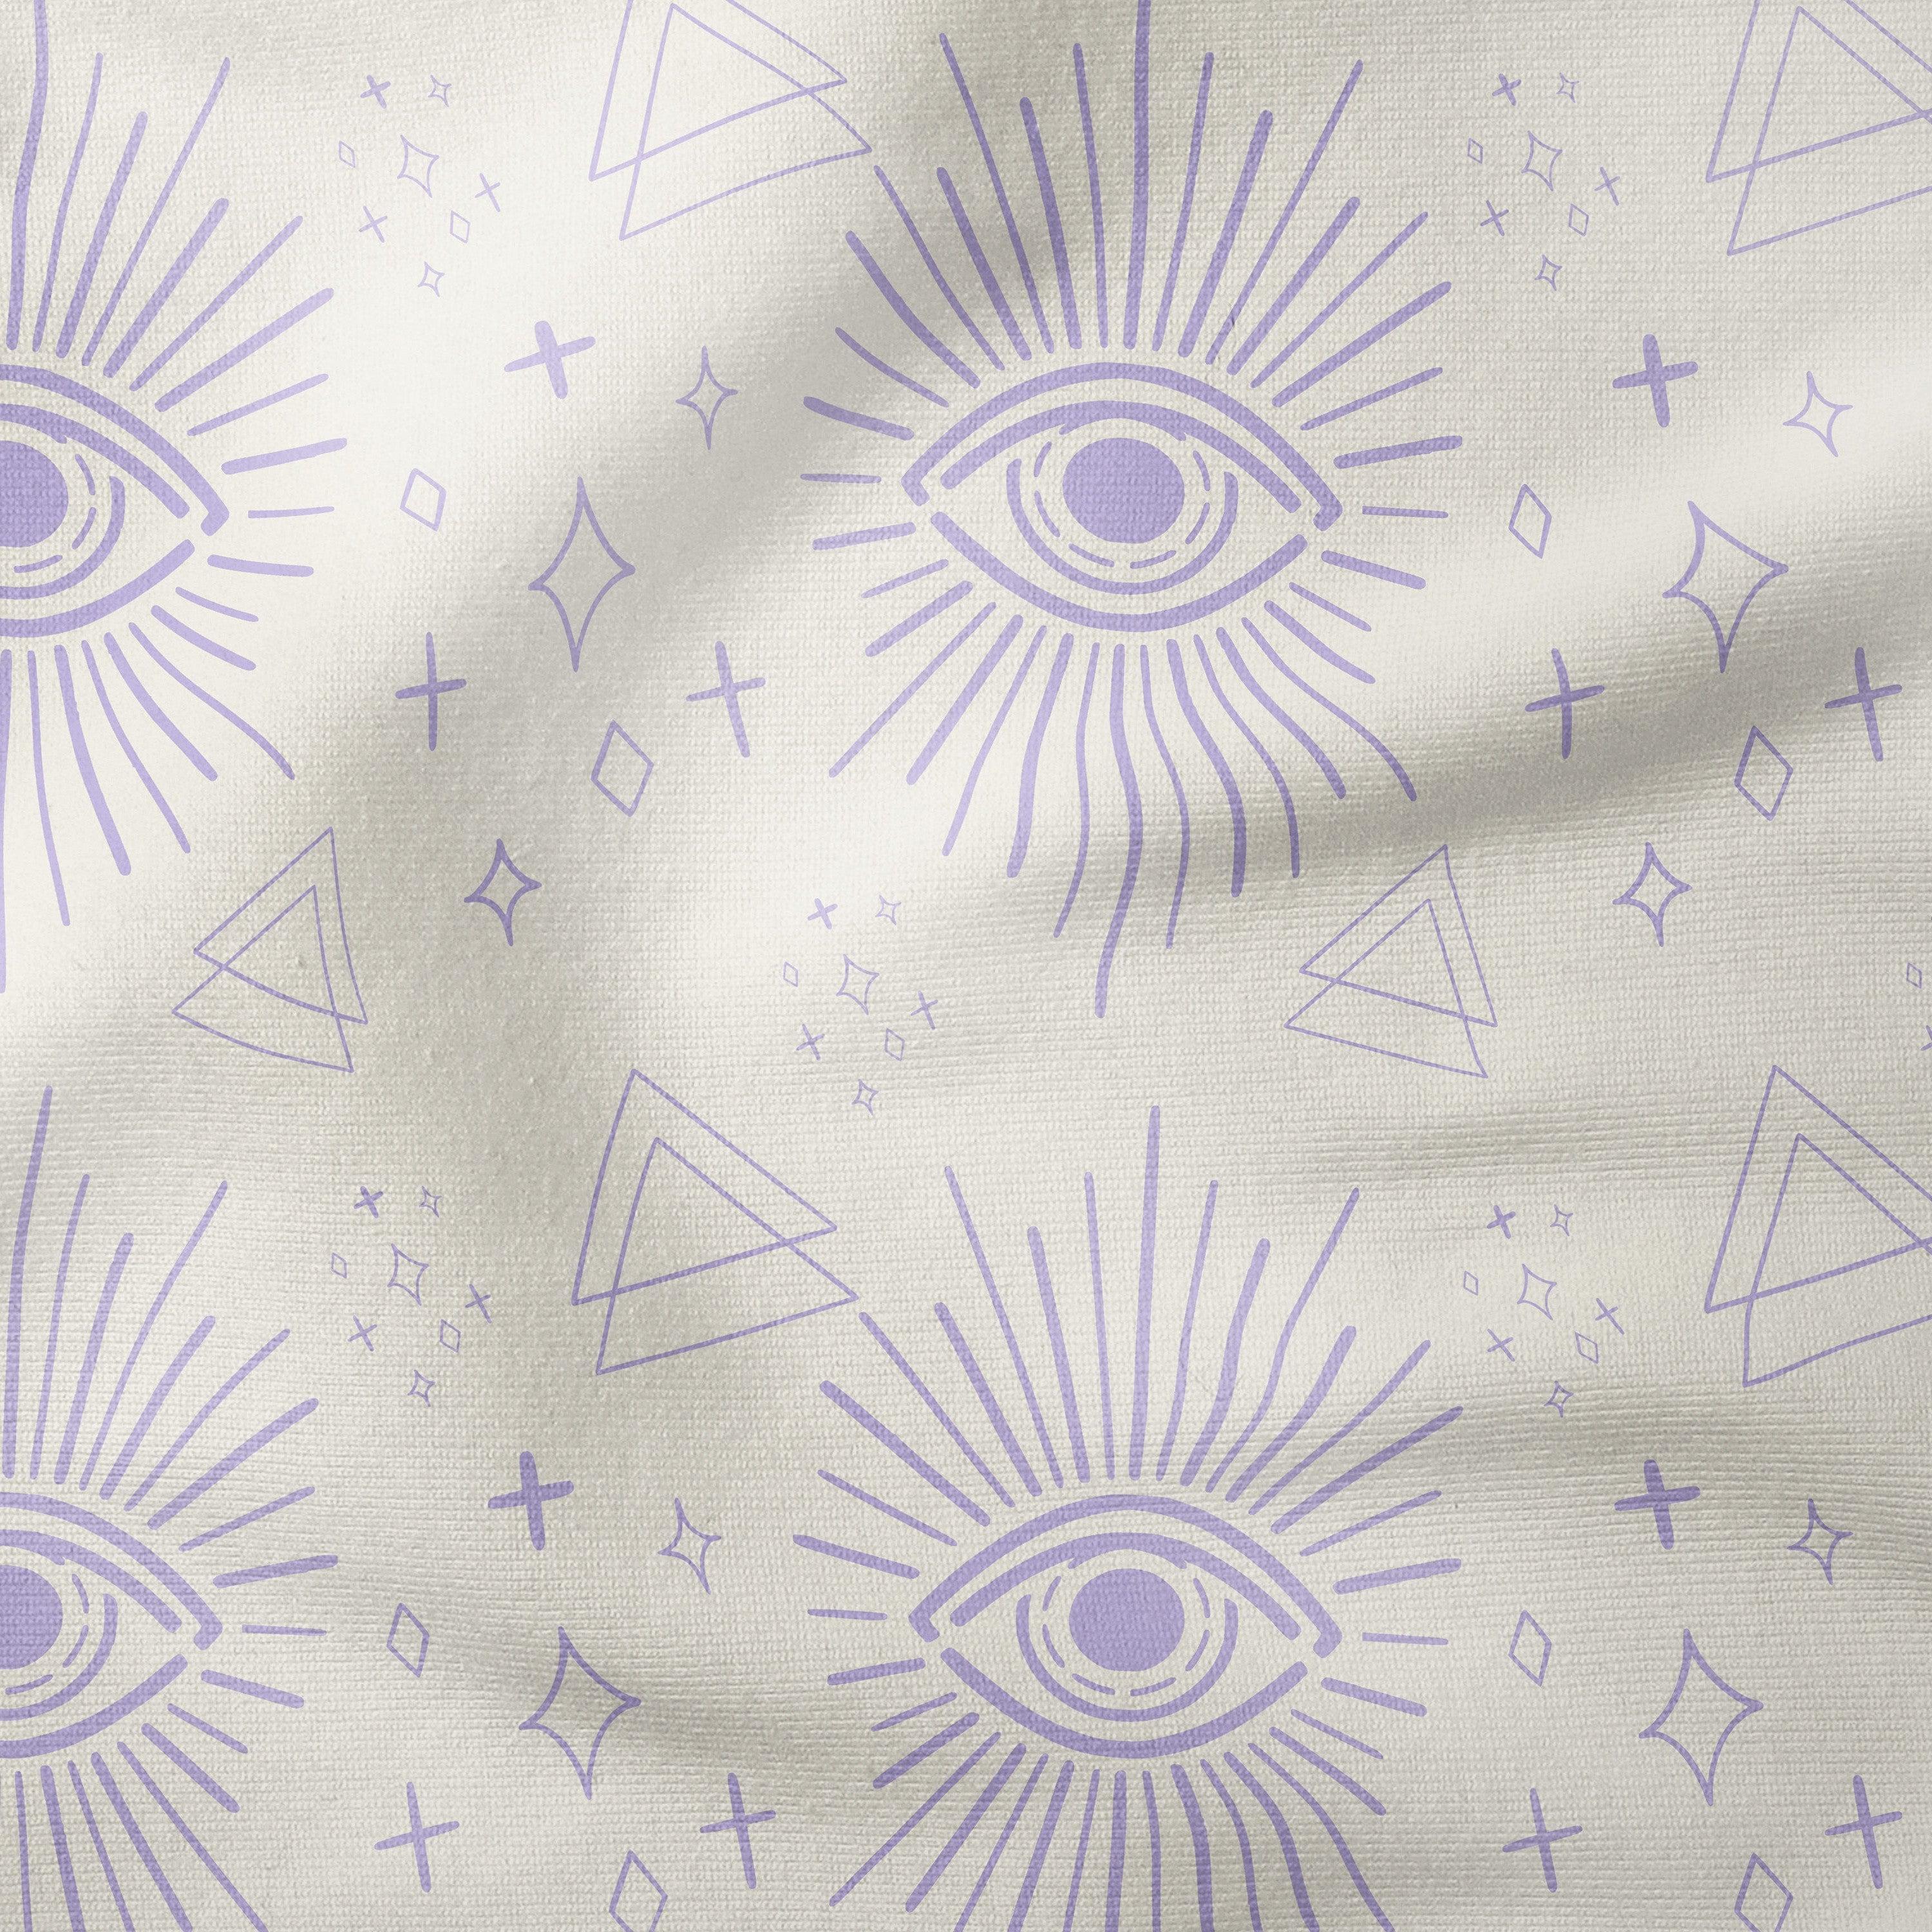 Mystic Eyes-Art Print Fabric-Melco Fabrics-Lavender on Tofu-Cotton Poplin (110gsm)-Melco Fabrics-Online-Fabric-Shop-Australia